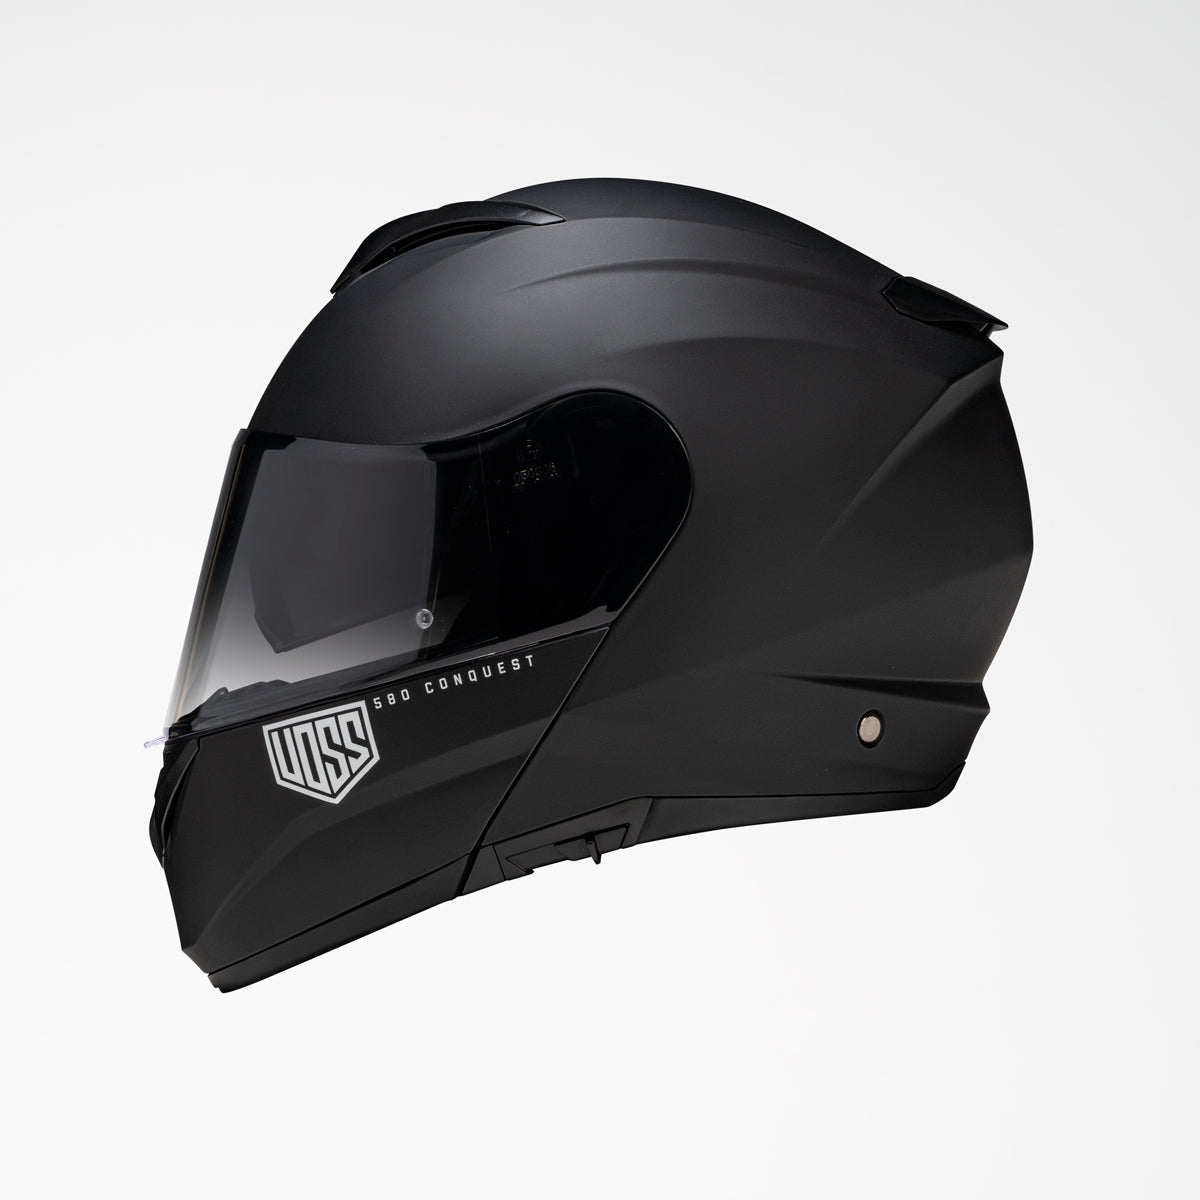 Voss 580 Conquest Black Helmet